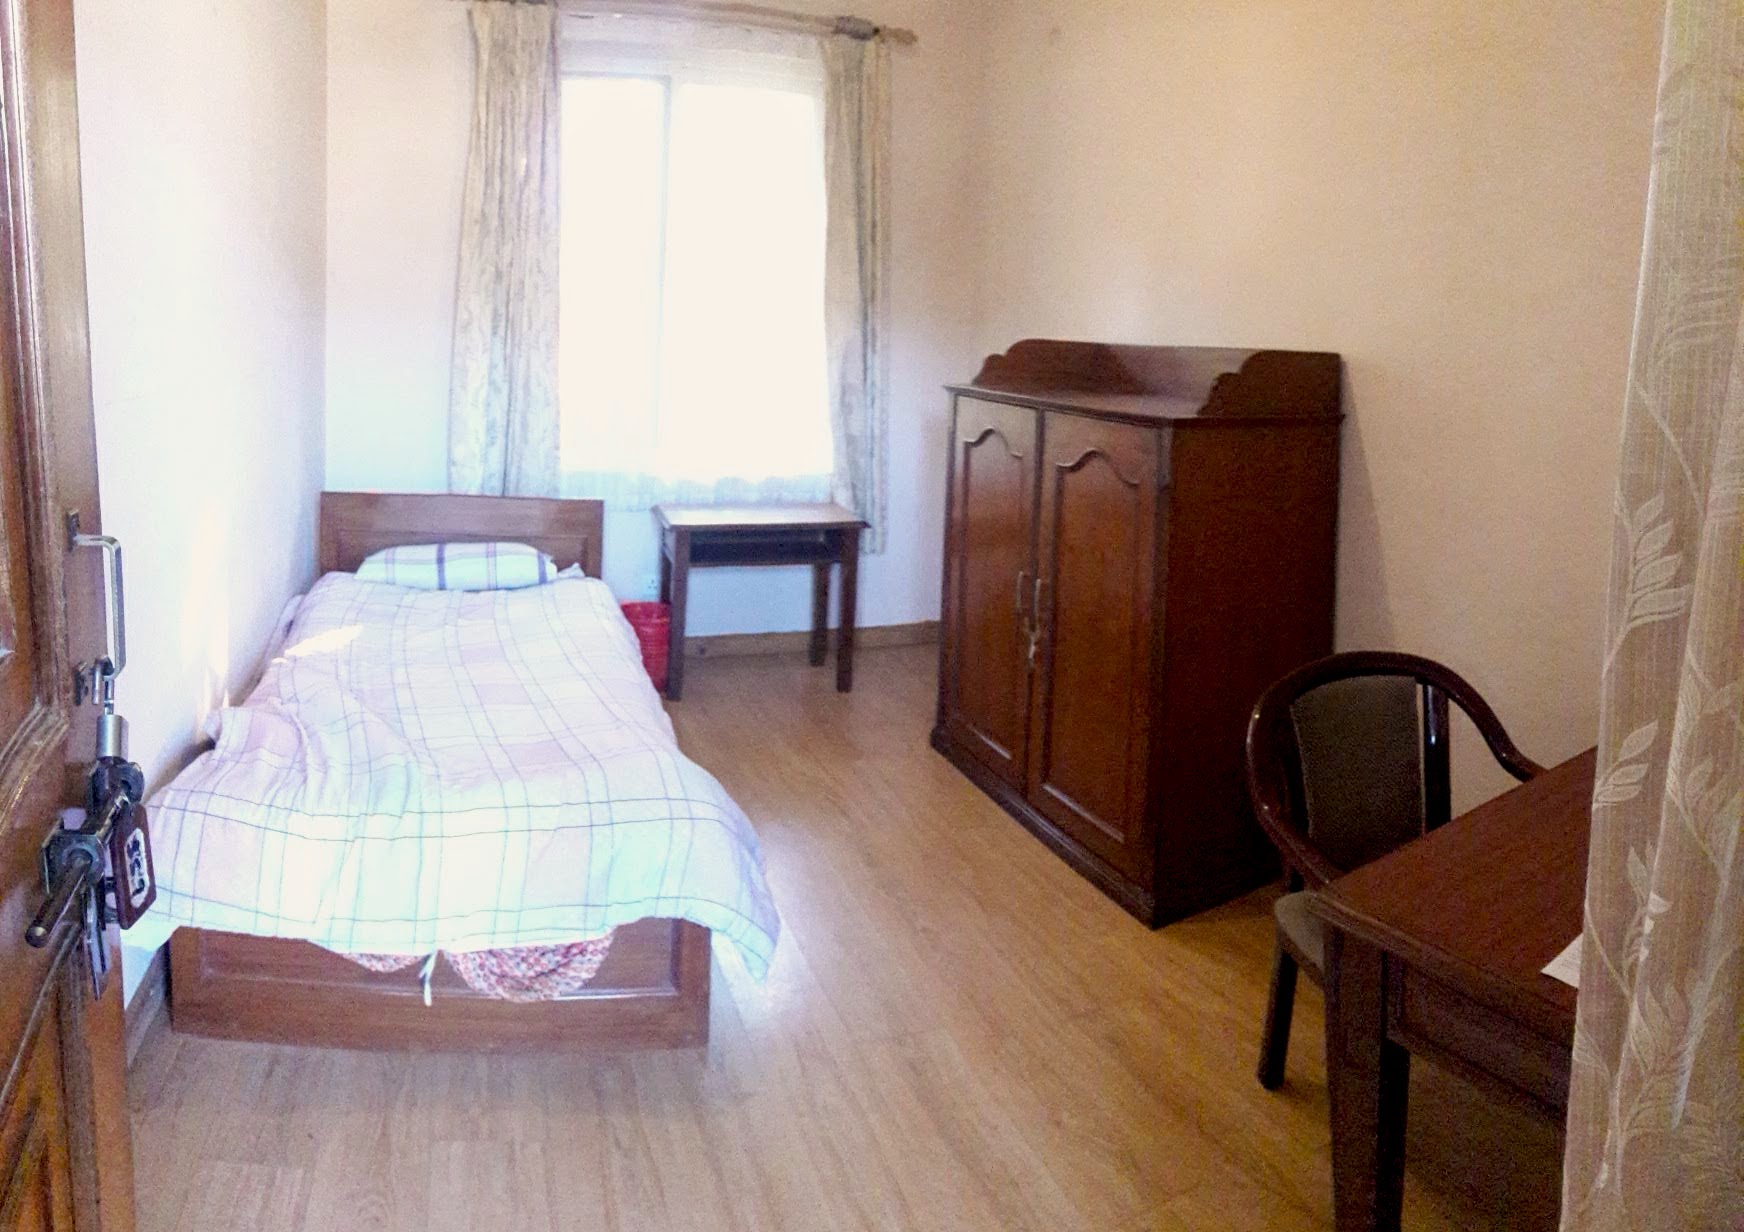 Single room with shared bathroom at kopan monastery